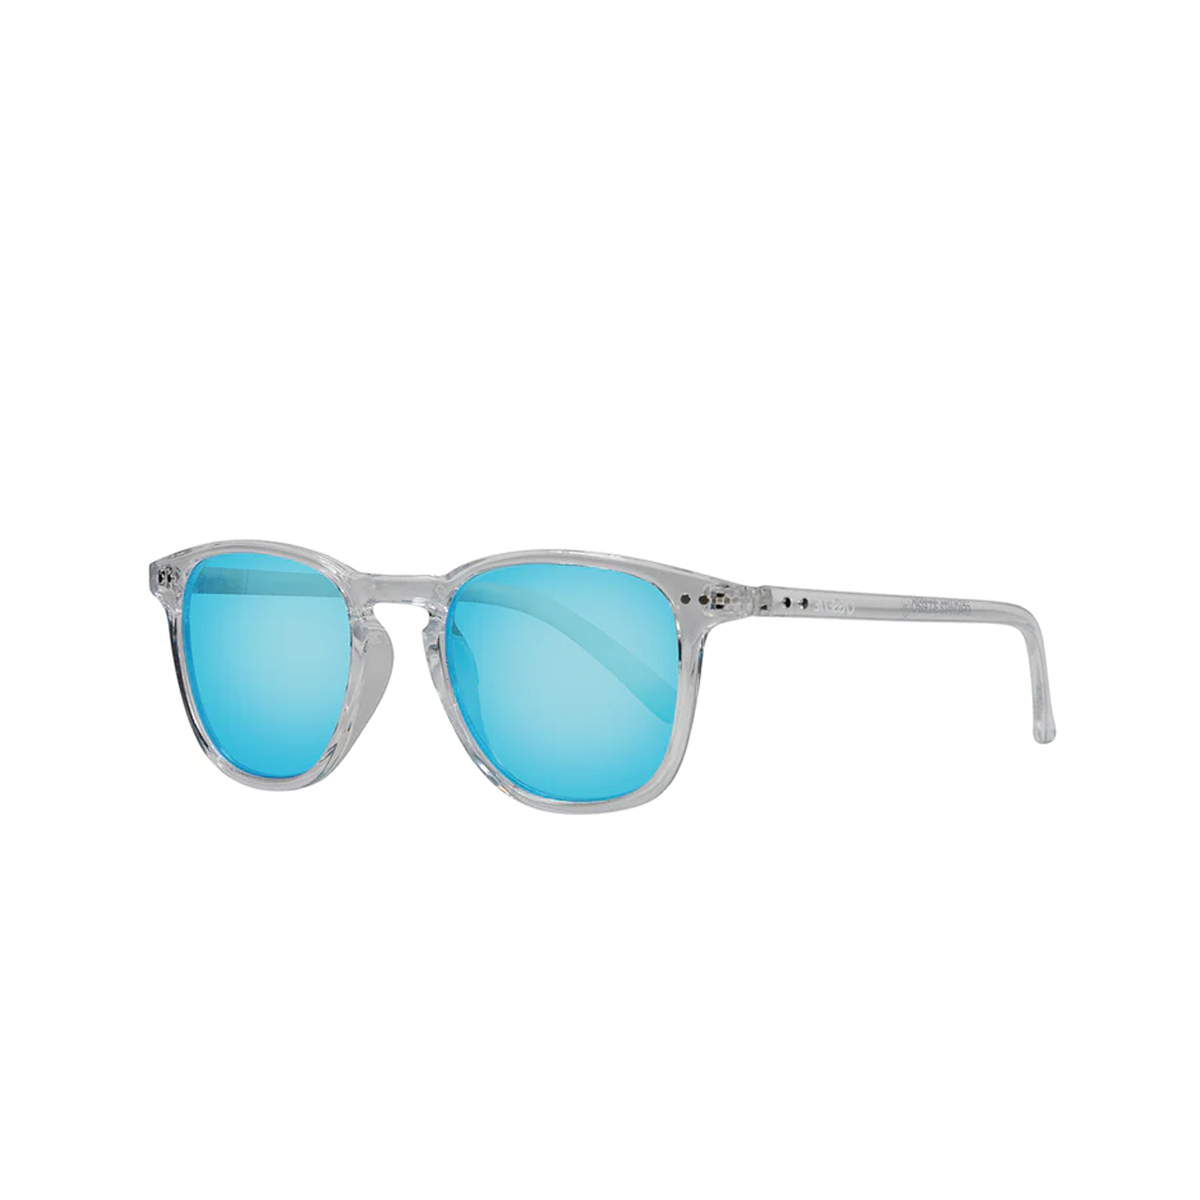 Cassette Optics Standard Sunglasses - Assorted Colors